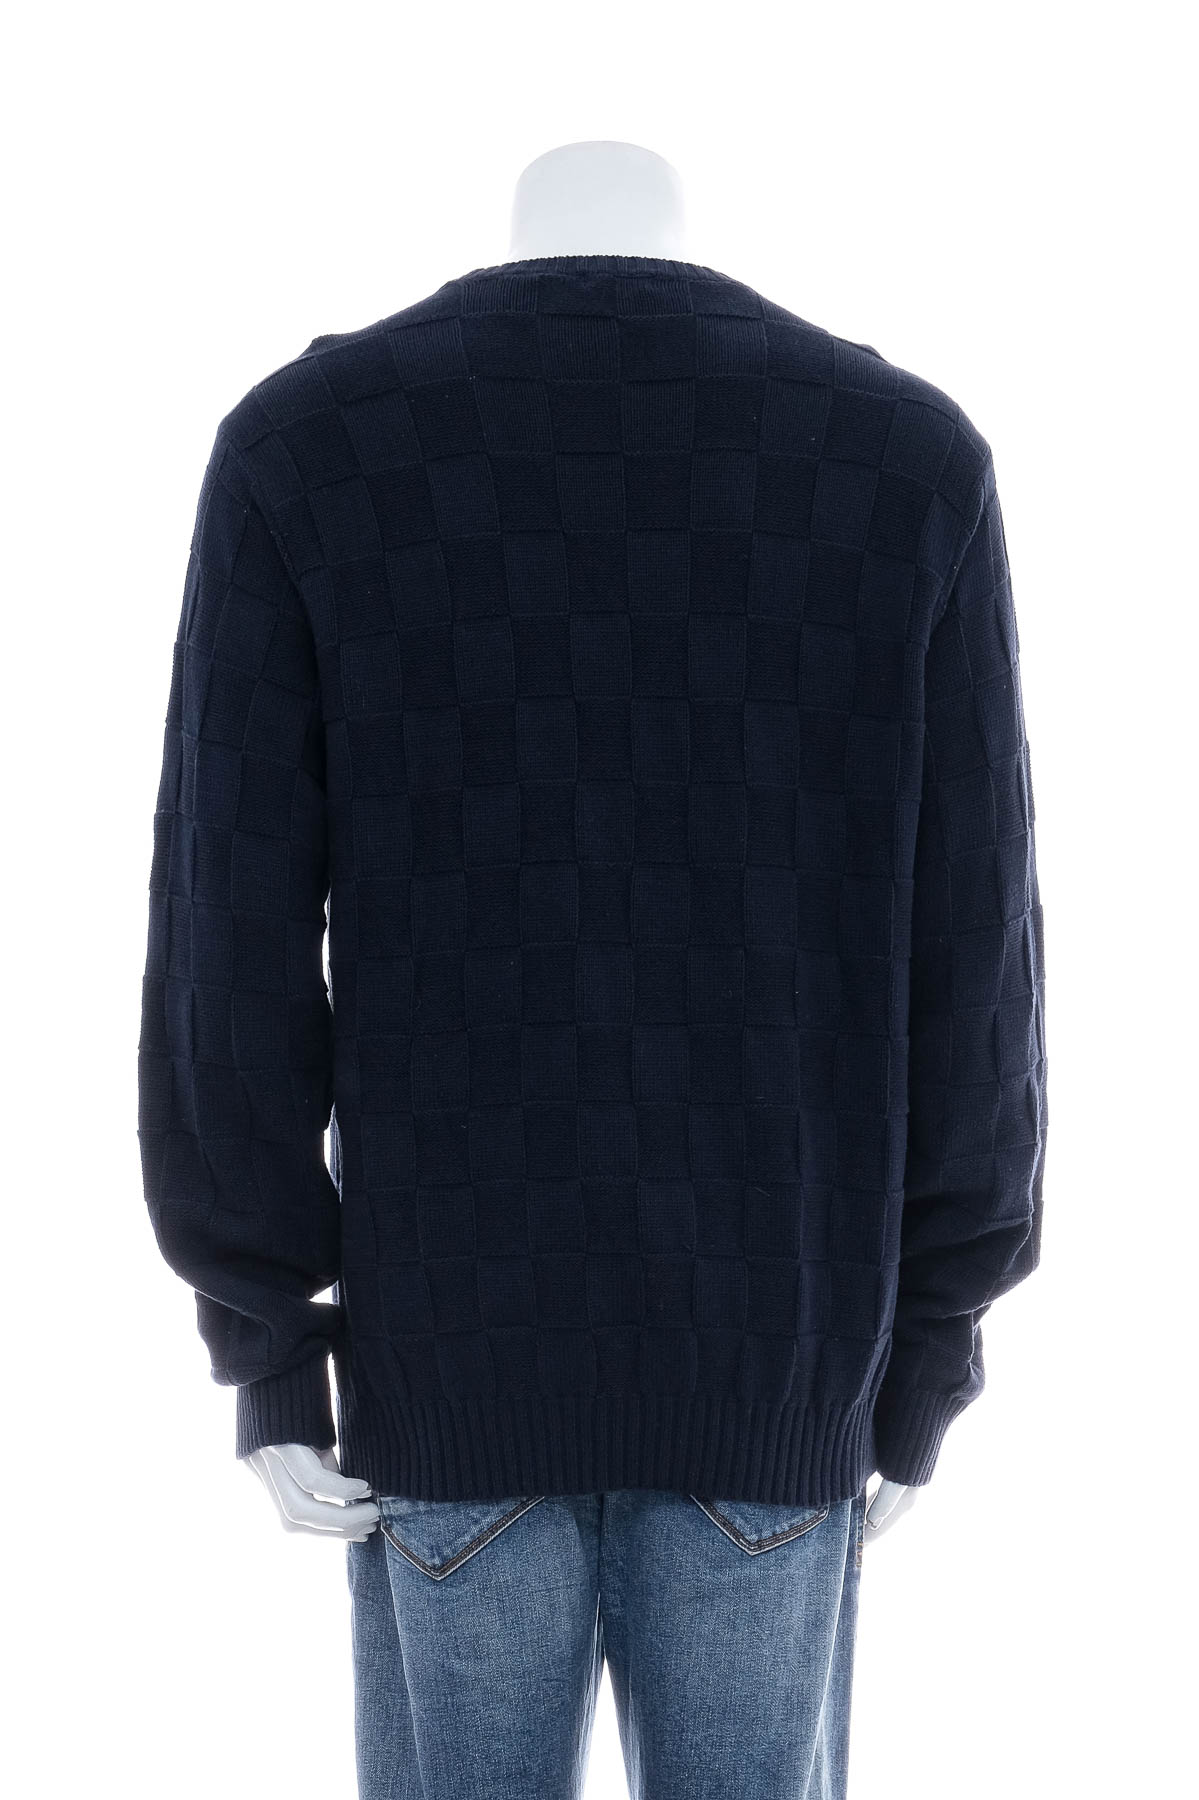 Men's sweater - IZOD - 1